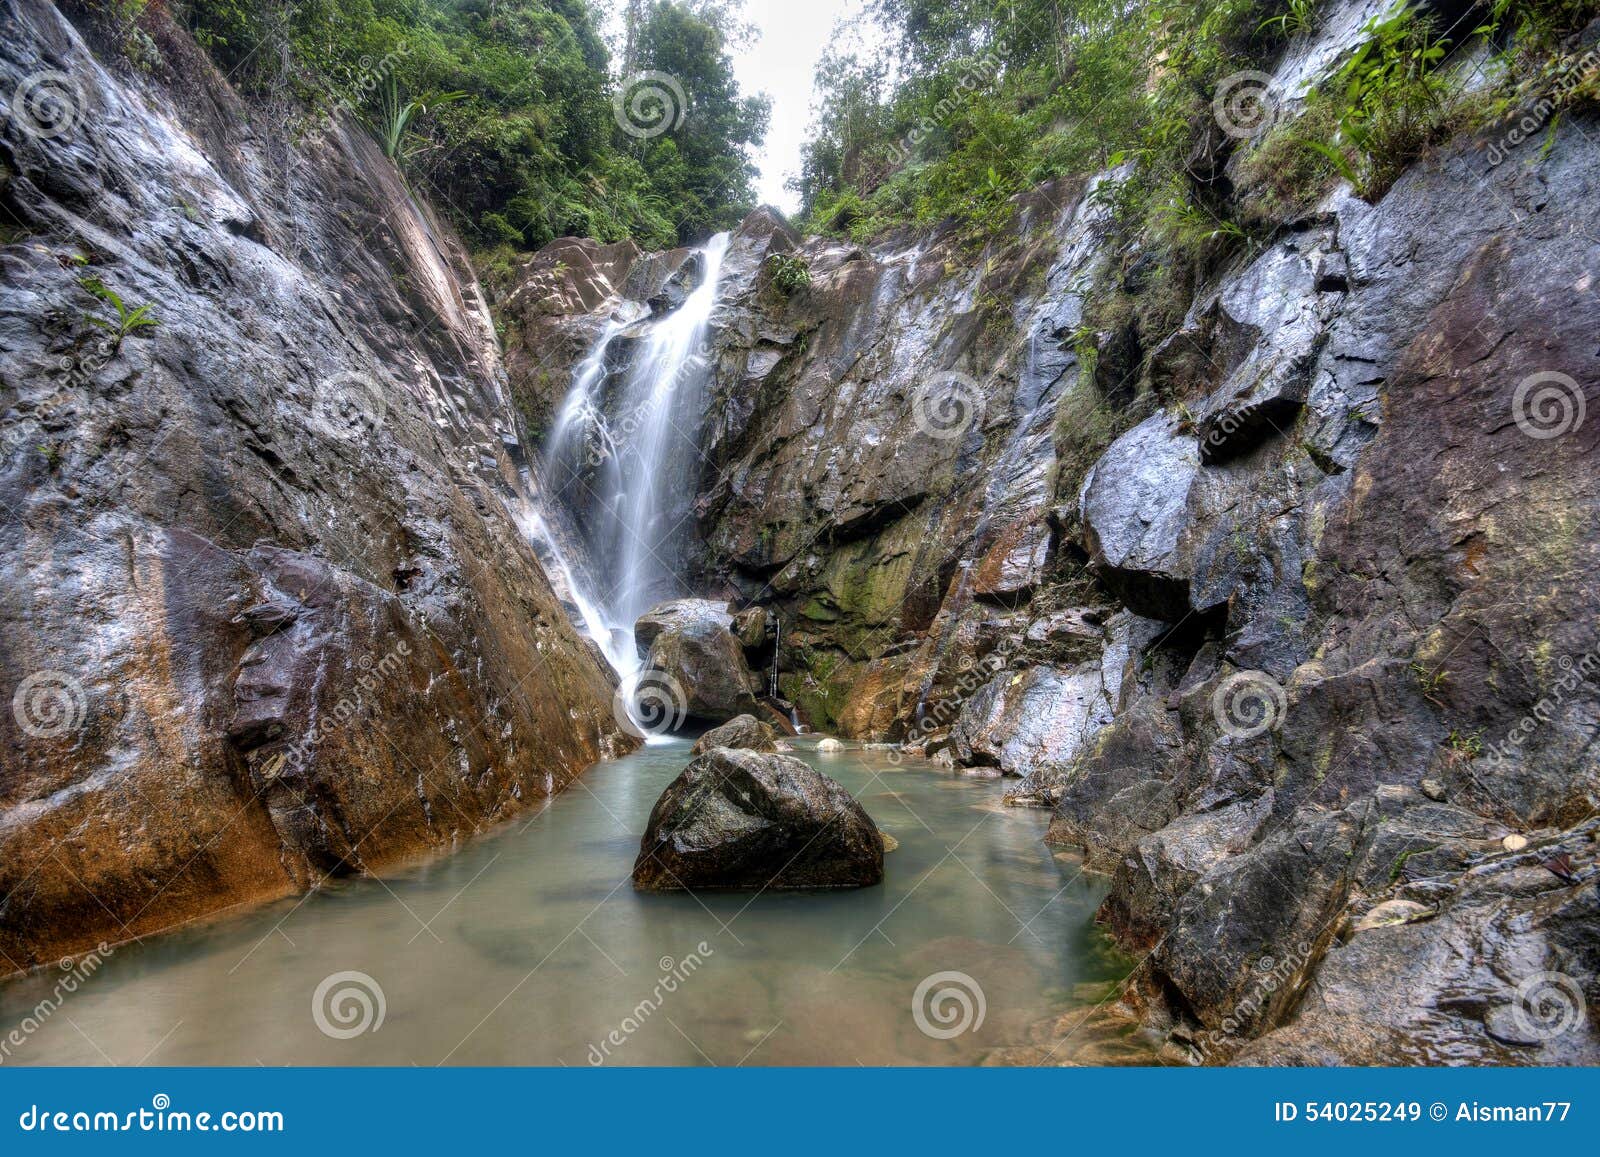 Beautiful Scenery Of Waterfall At Gunung Pulai Johor  